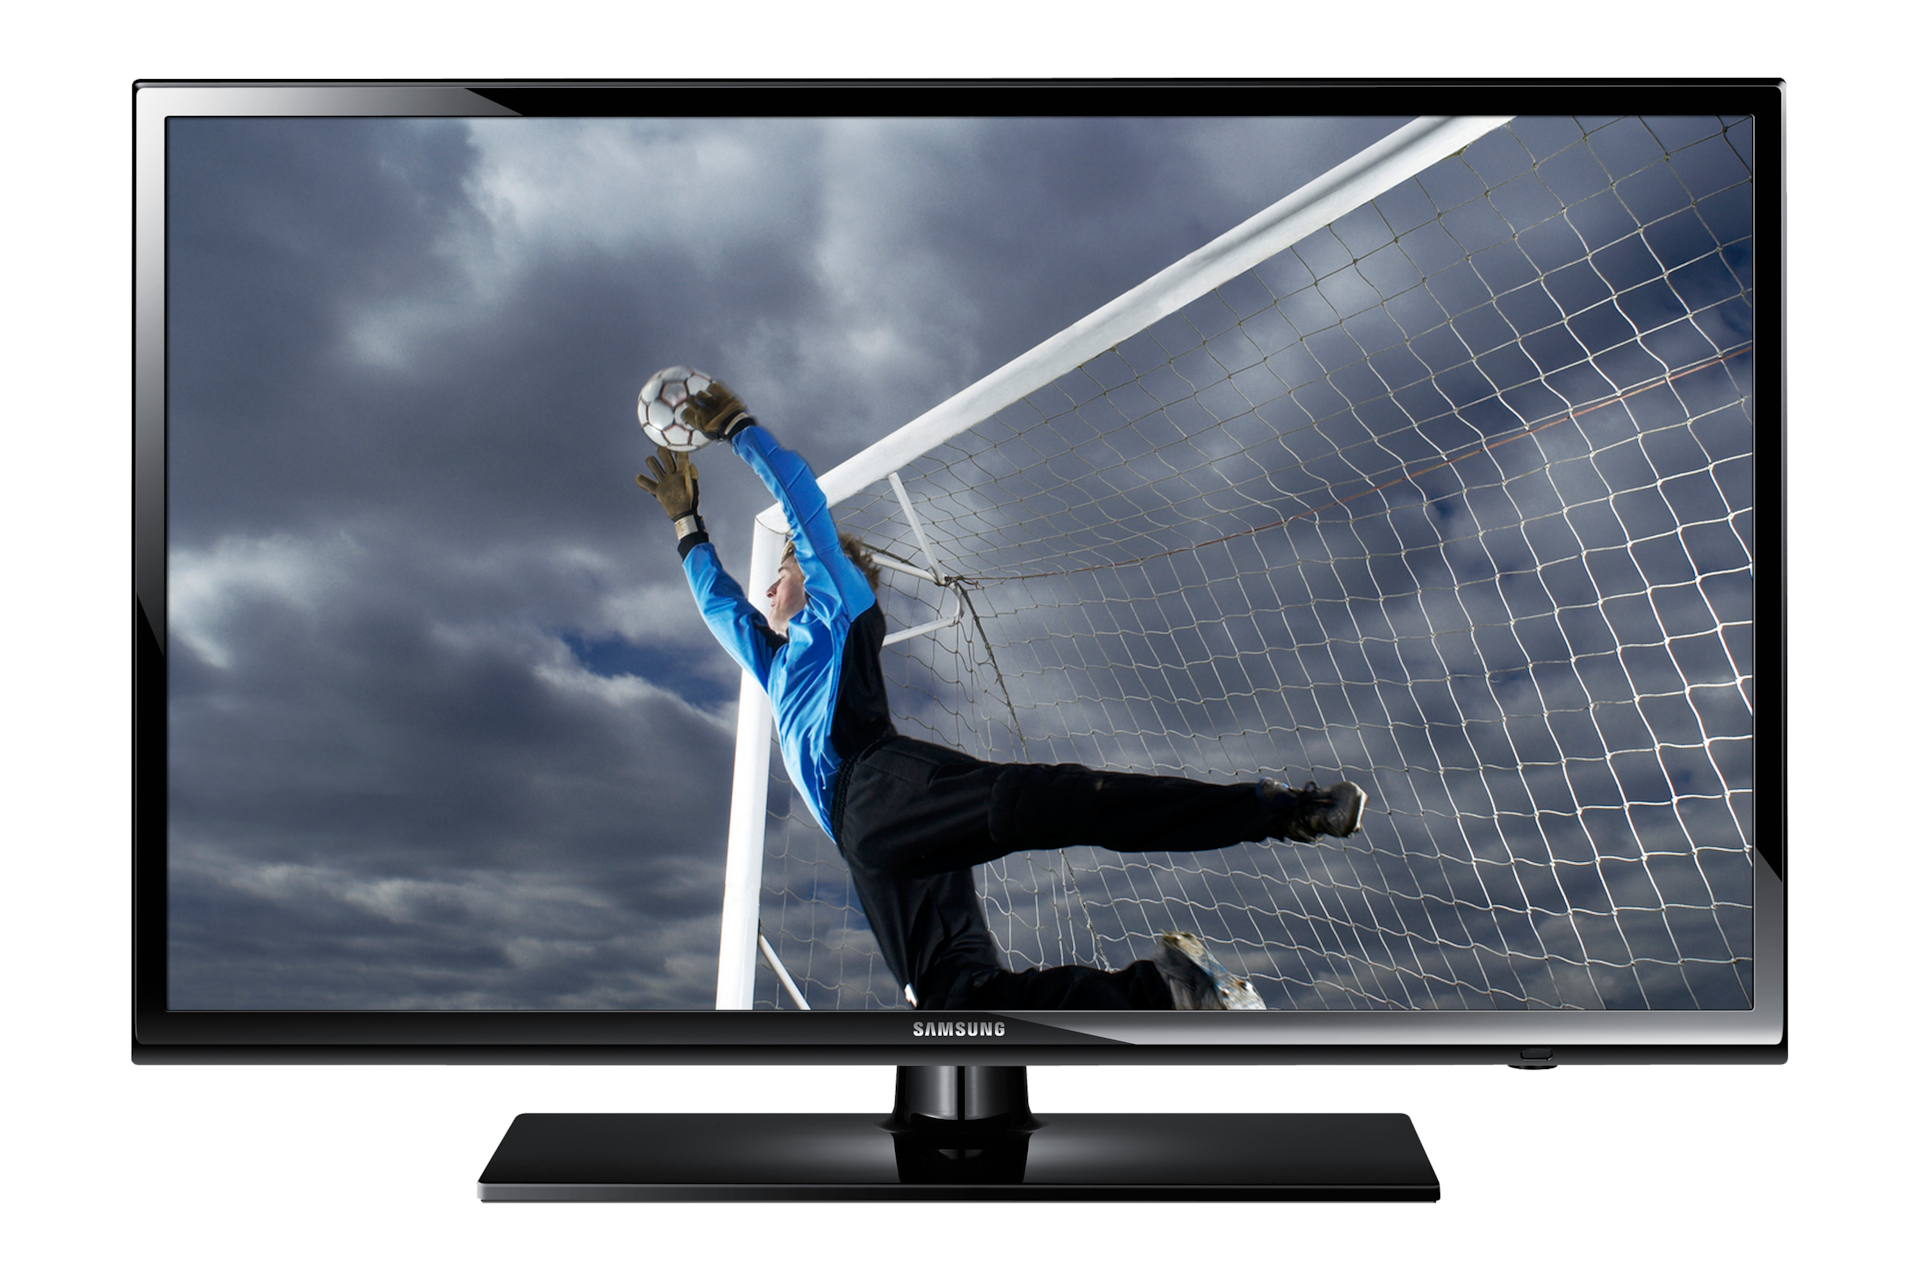 Led телевизоров samsung smart tv. Телевизор Samsung ue32. Samsung ue40h5303 led. Samsung ue32fh4003w. Samsung ue32eh4003 led.